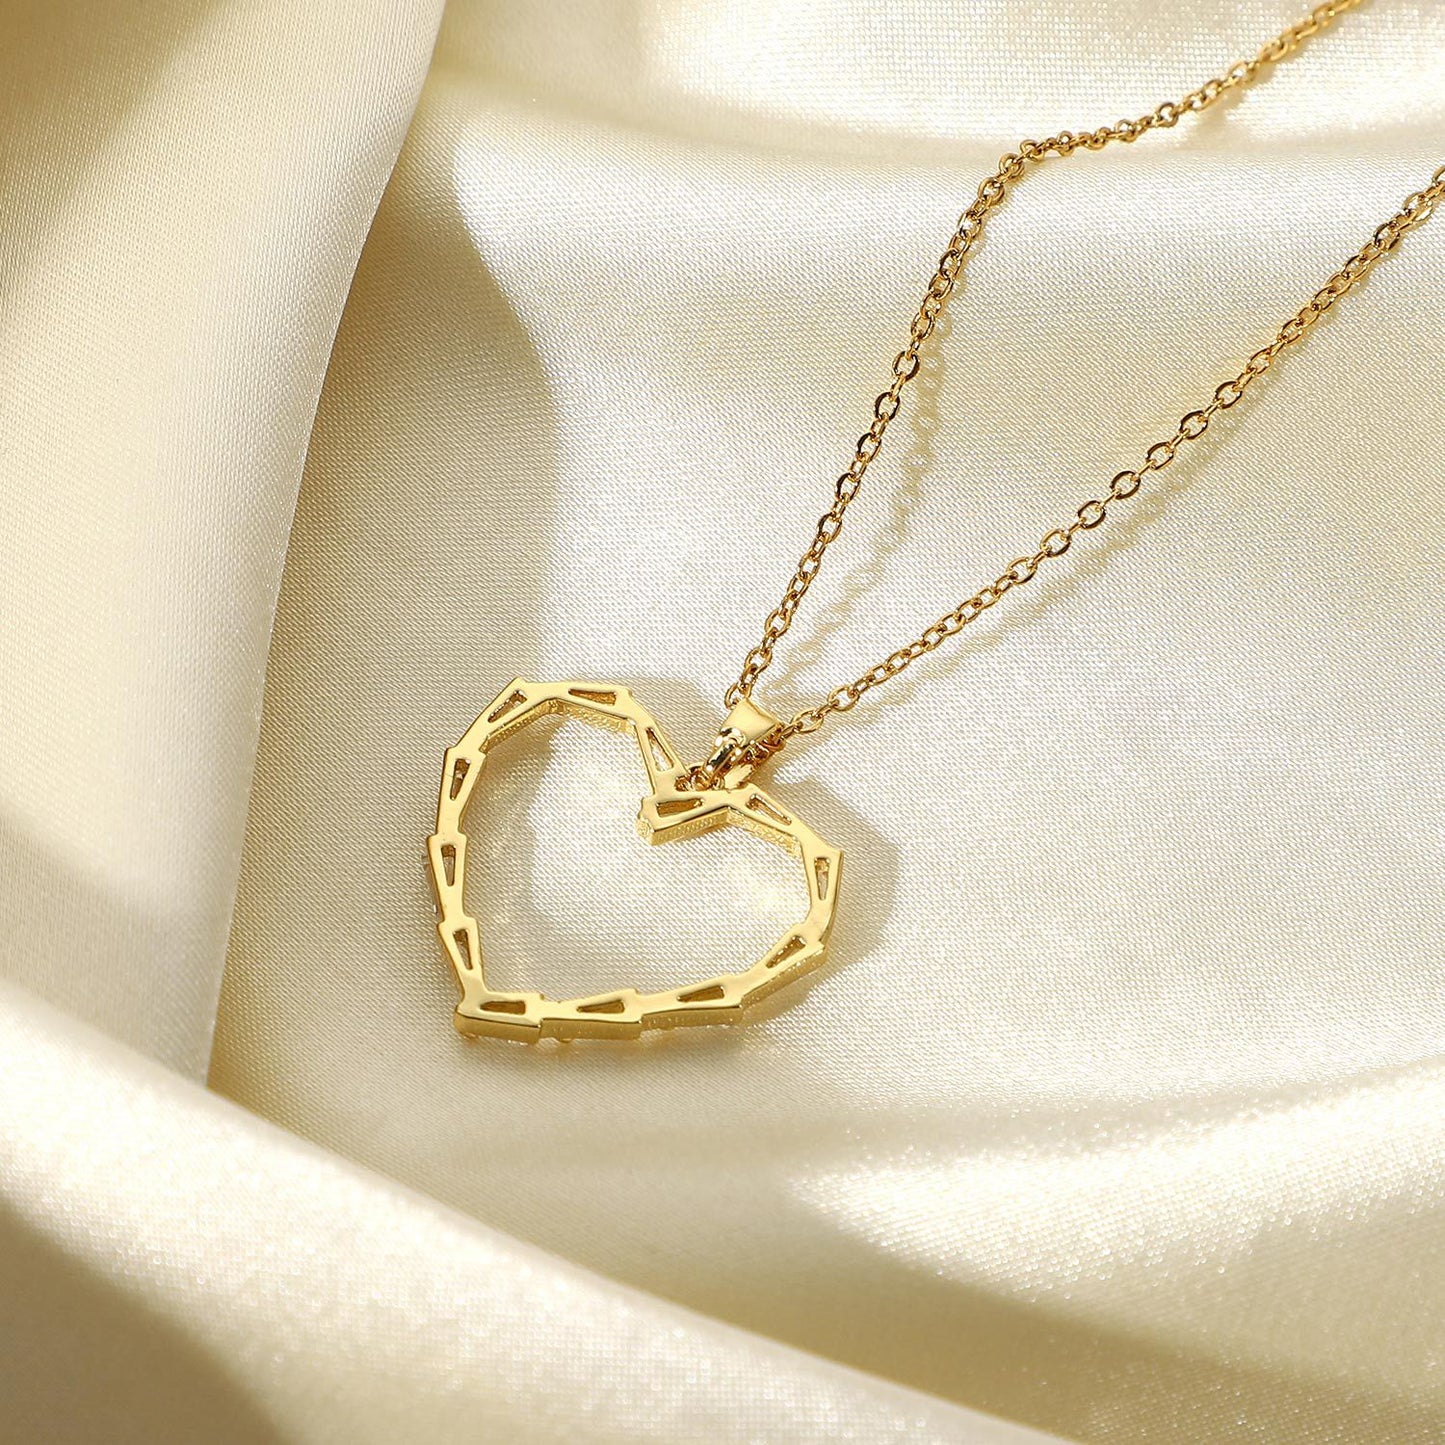 Women's Stainless Steel Triangle Heart-shaped Zircon Pendant Necklace - Beuti-Ful